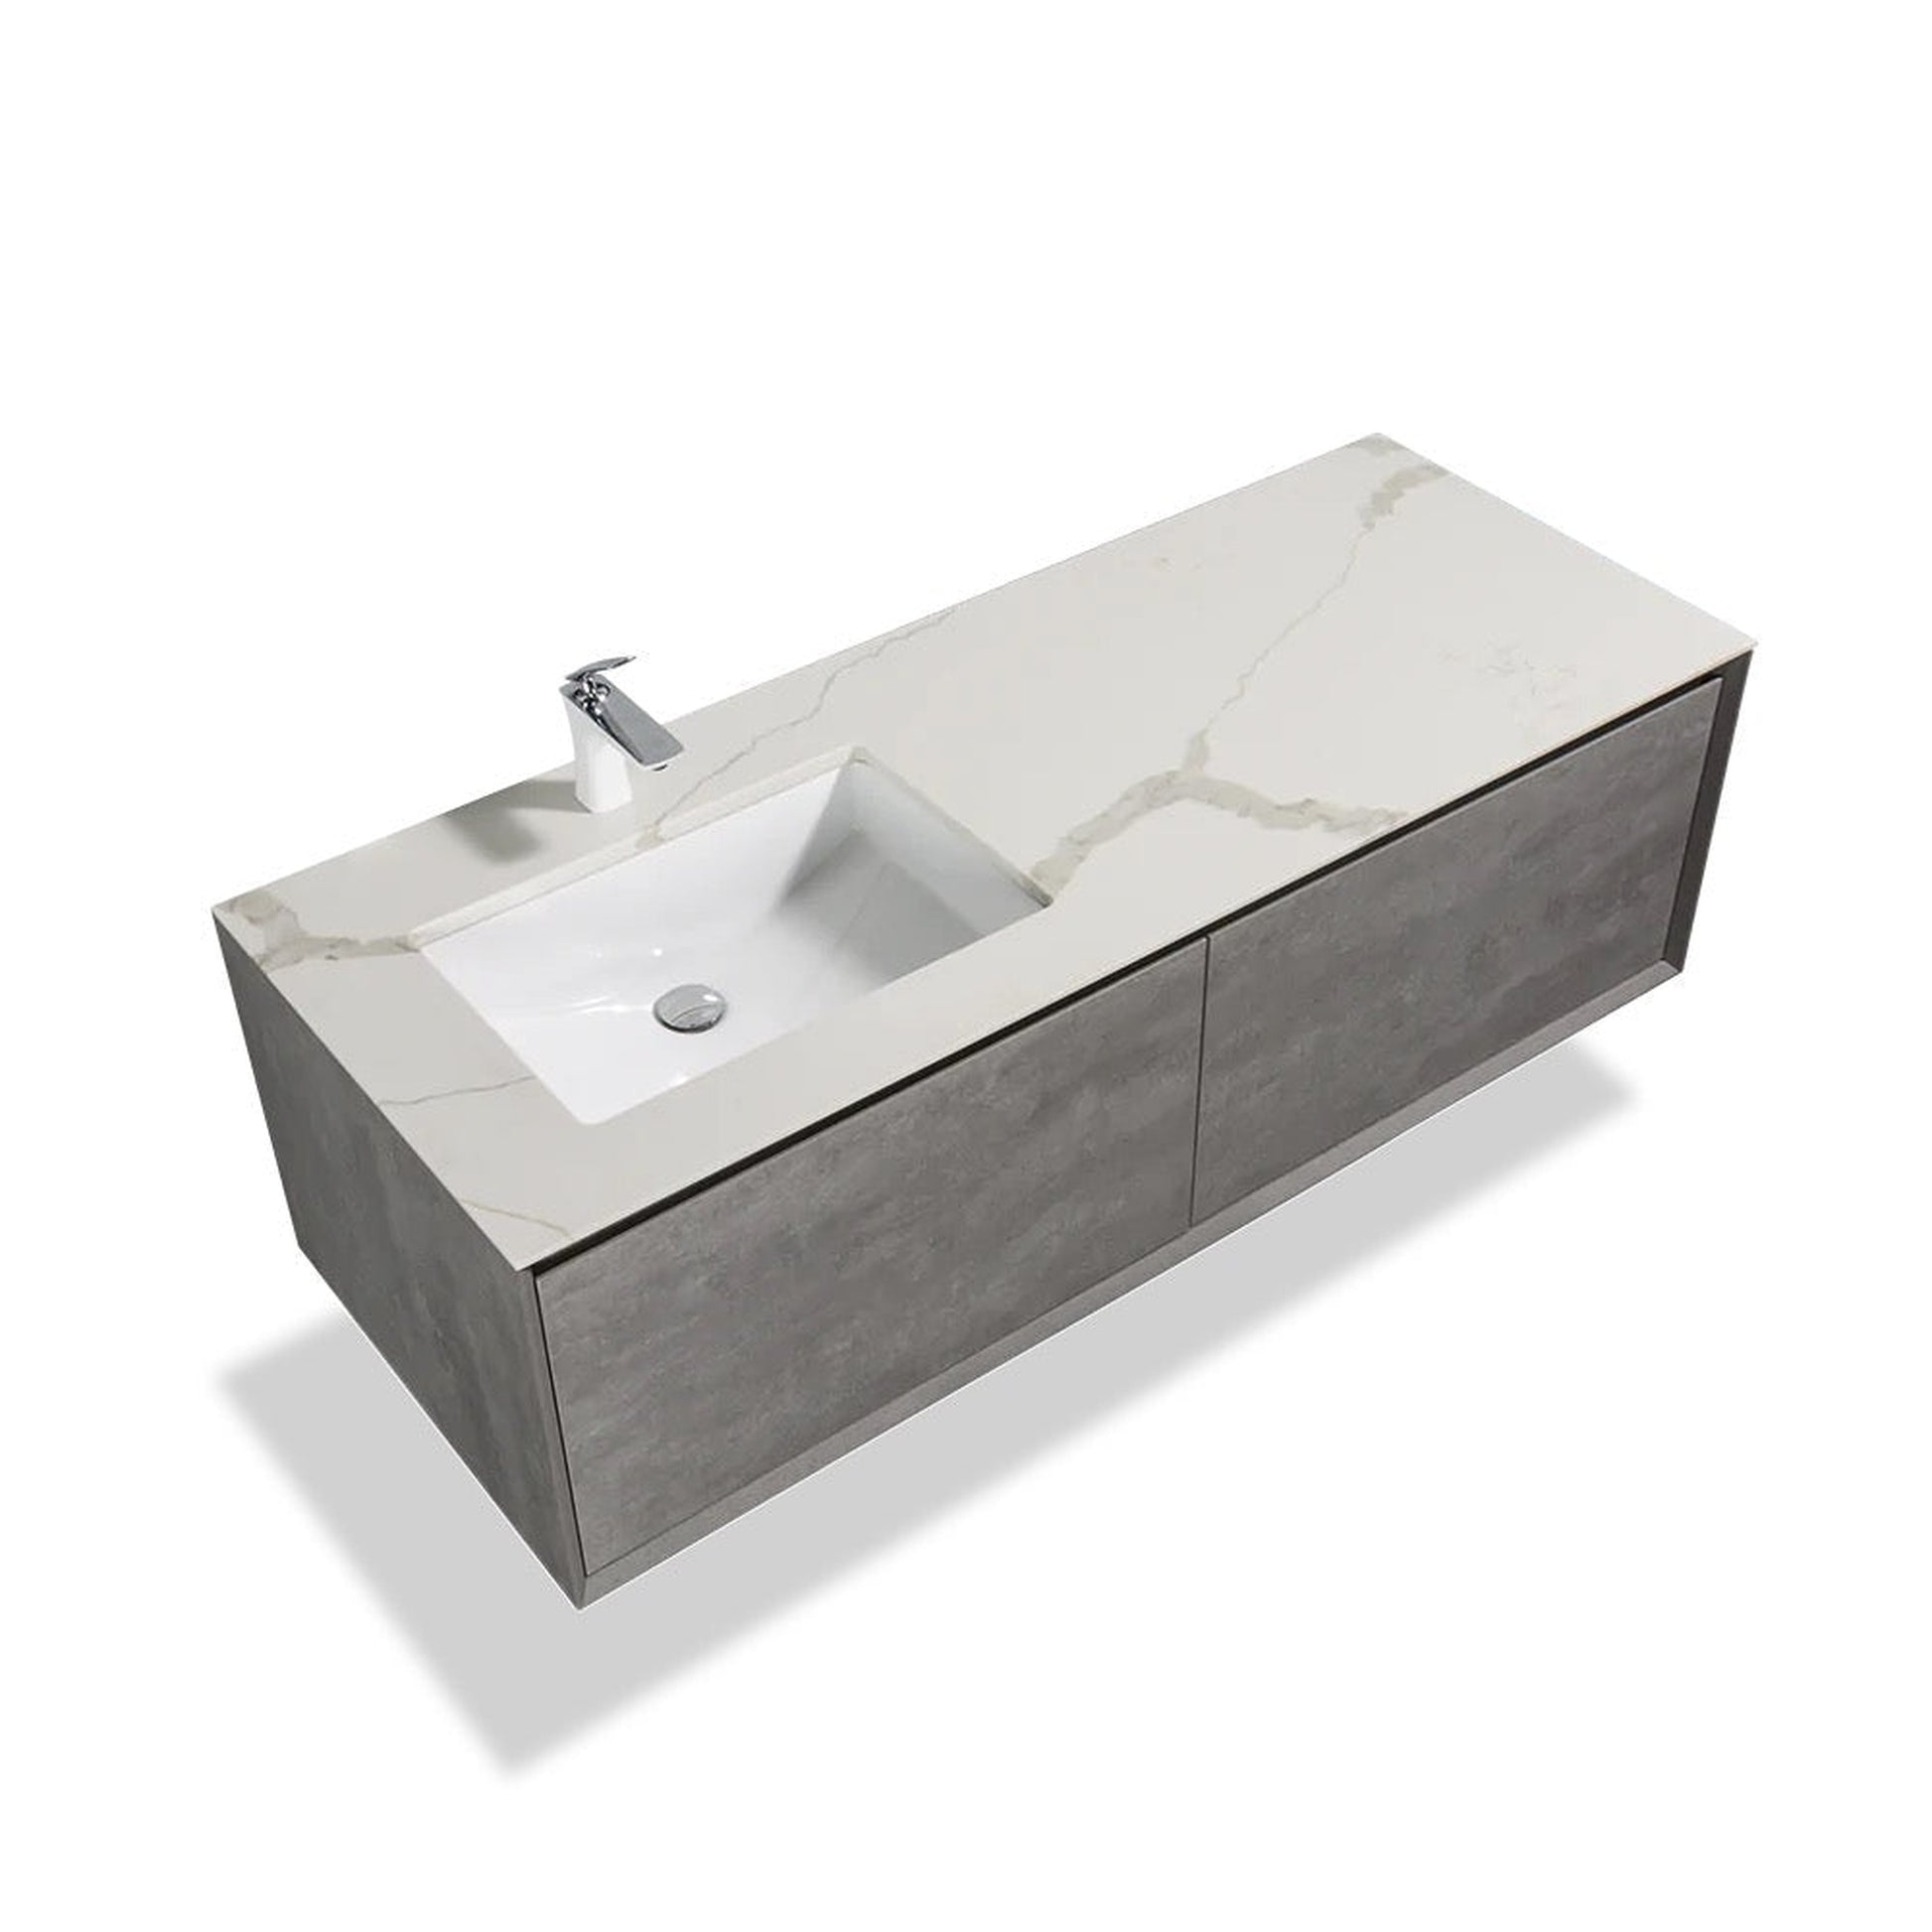 TONA Freda 60" Cement Gray Wall-Mounted Bathroom Vanity with Quartz Top & Ceramic Sink